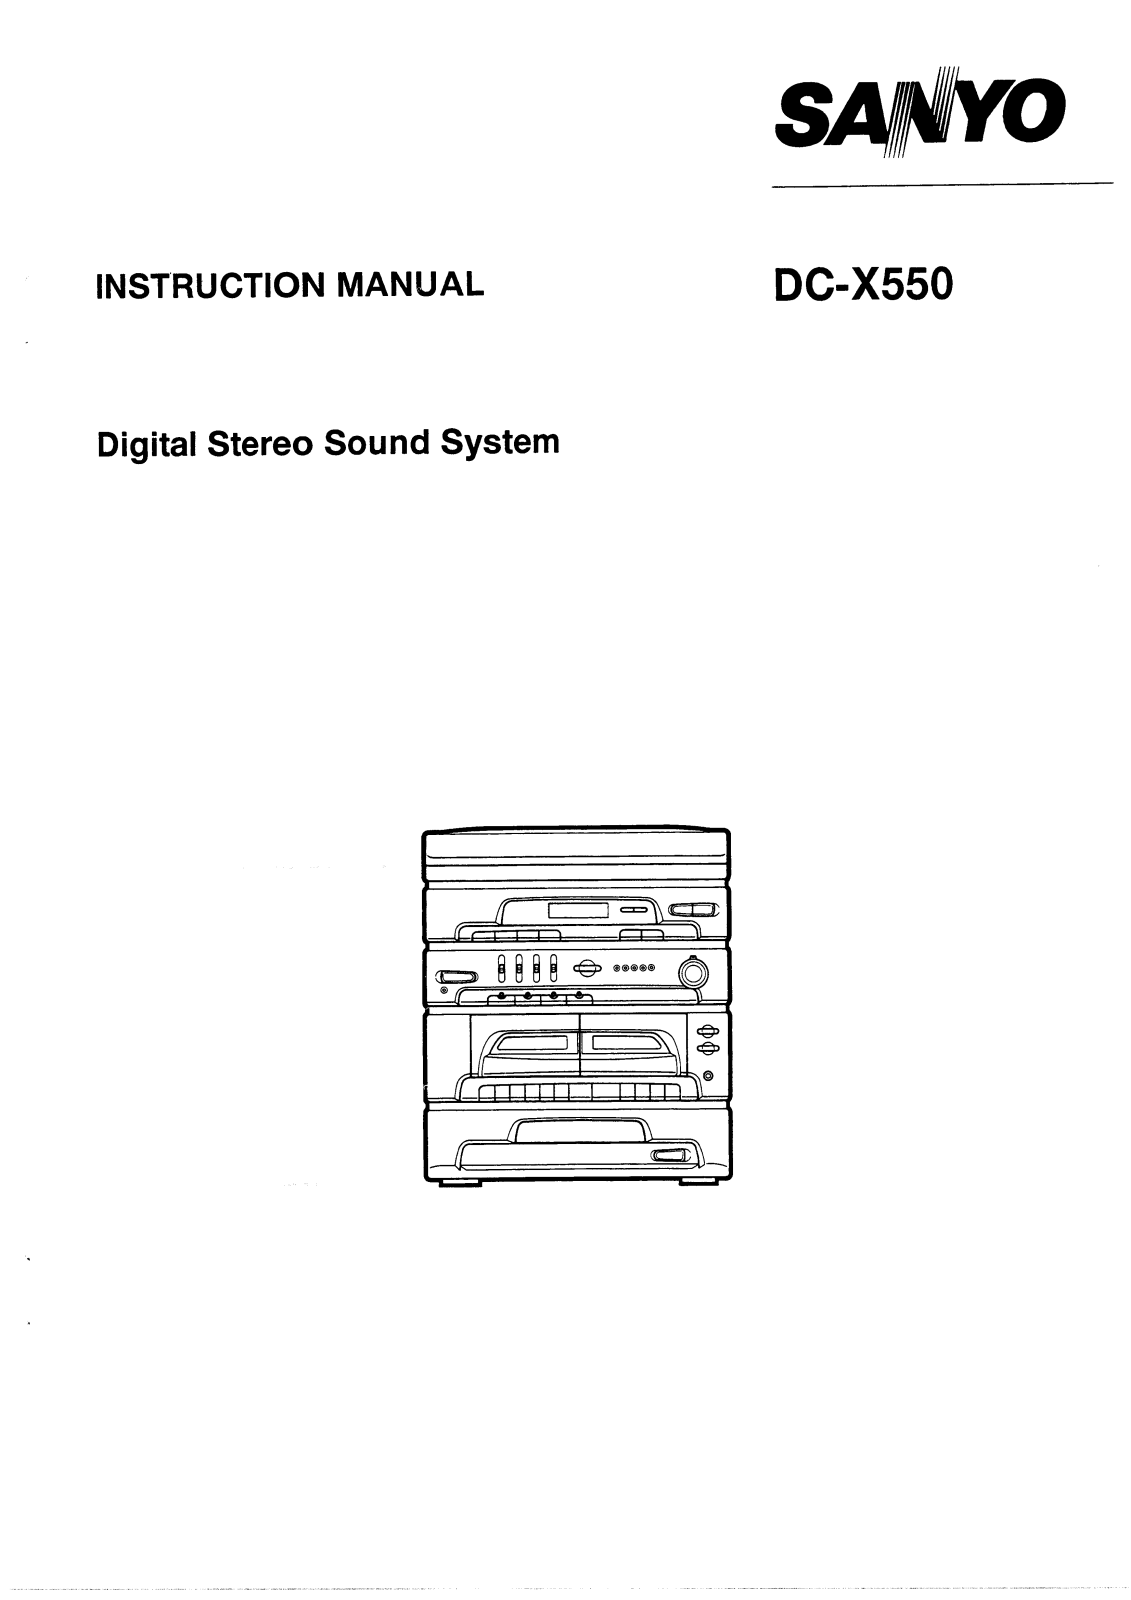 Sanyo DC-X550 Instruction Manual